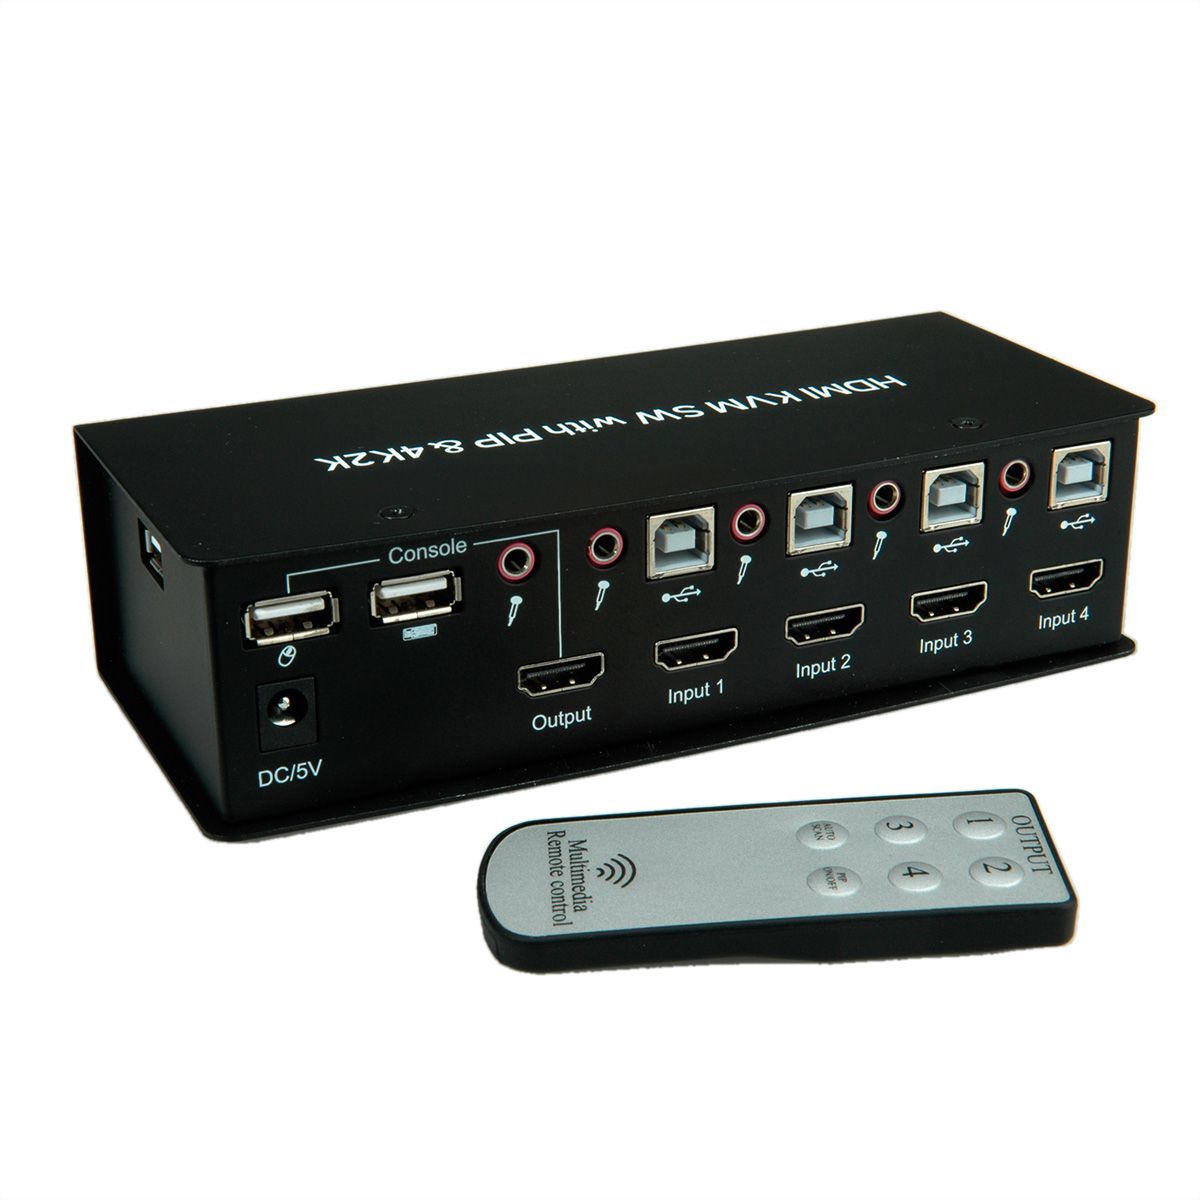 SGEYR KVM Switch 4 Port HDMI KVM Switch 4 Ports USB KVM Switcher with 4 Pcs USB Cables Support 3840x2160@30Hz,HDMI USB KVM 2.0 Device Control up to 4 Computers 